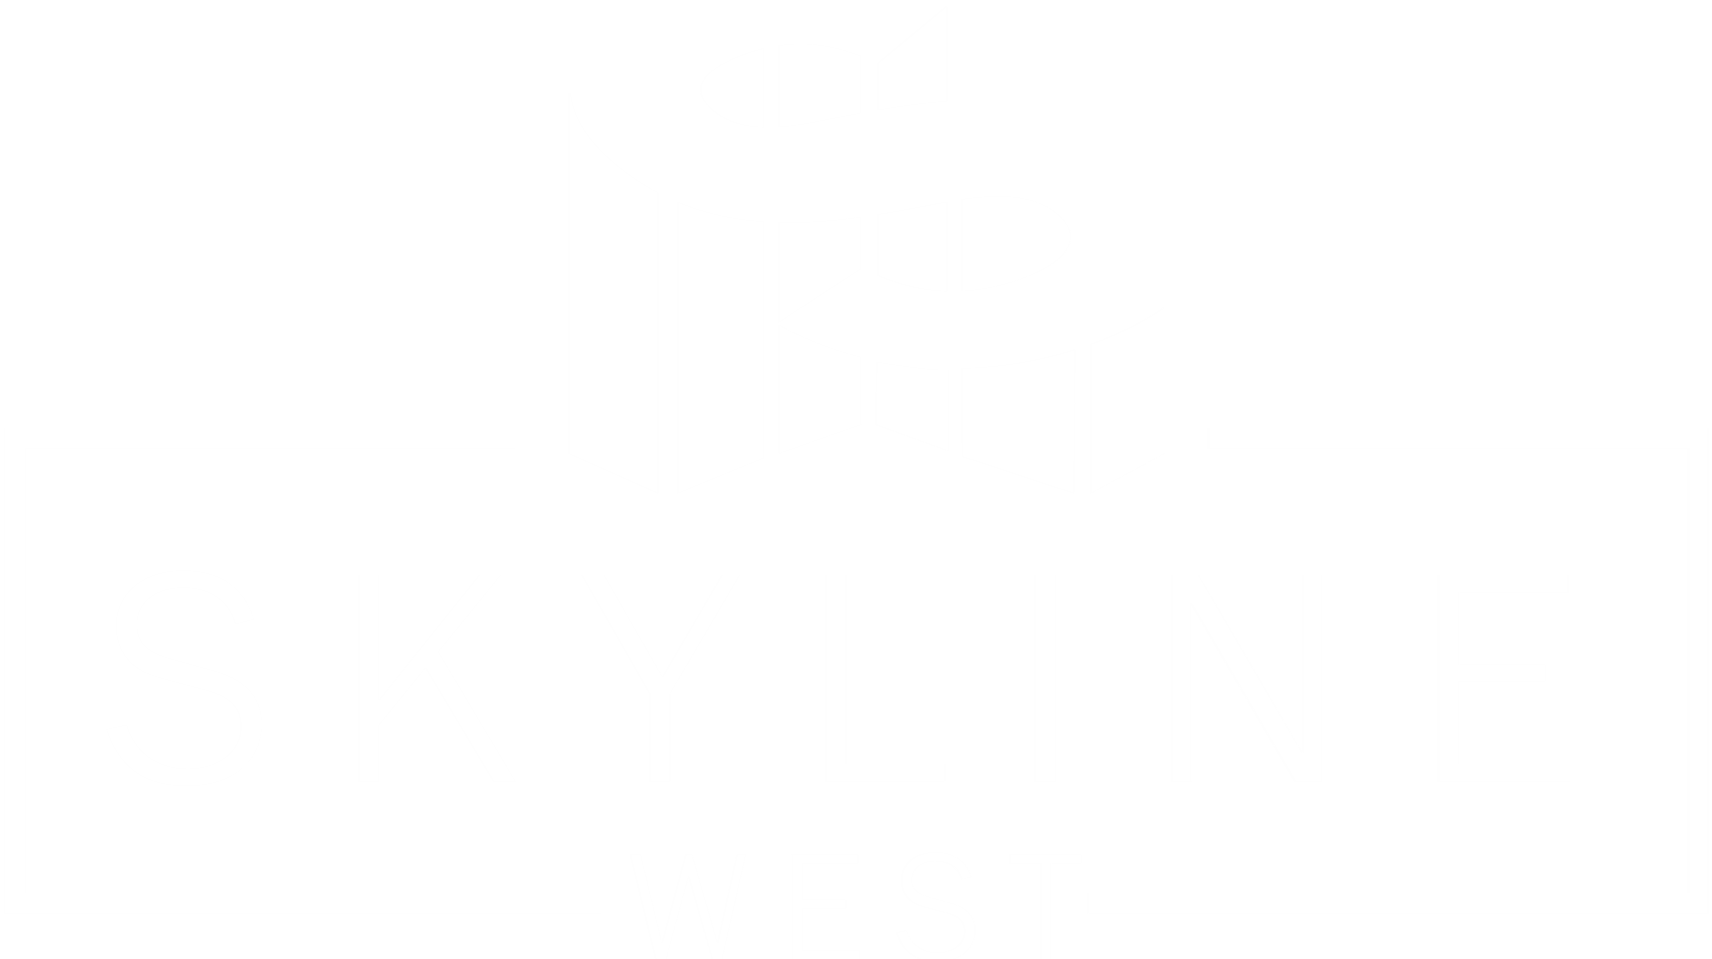 Skyline West white logo.